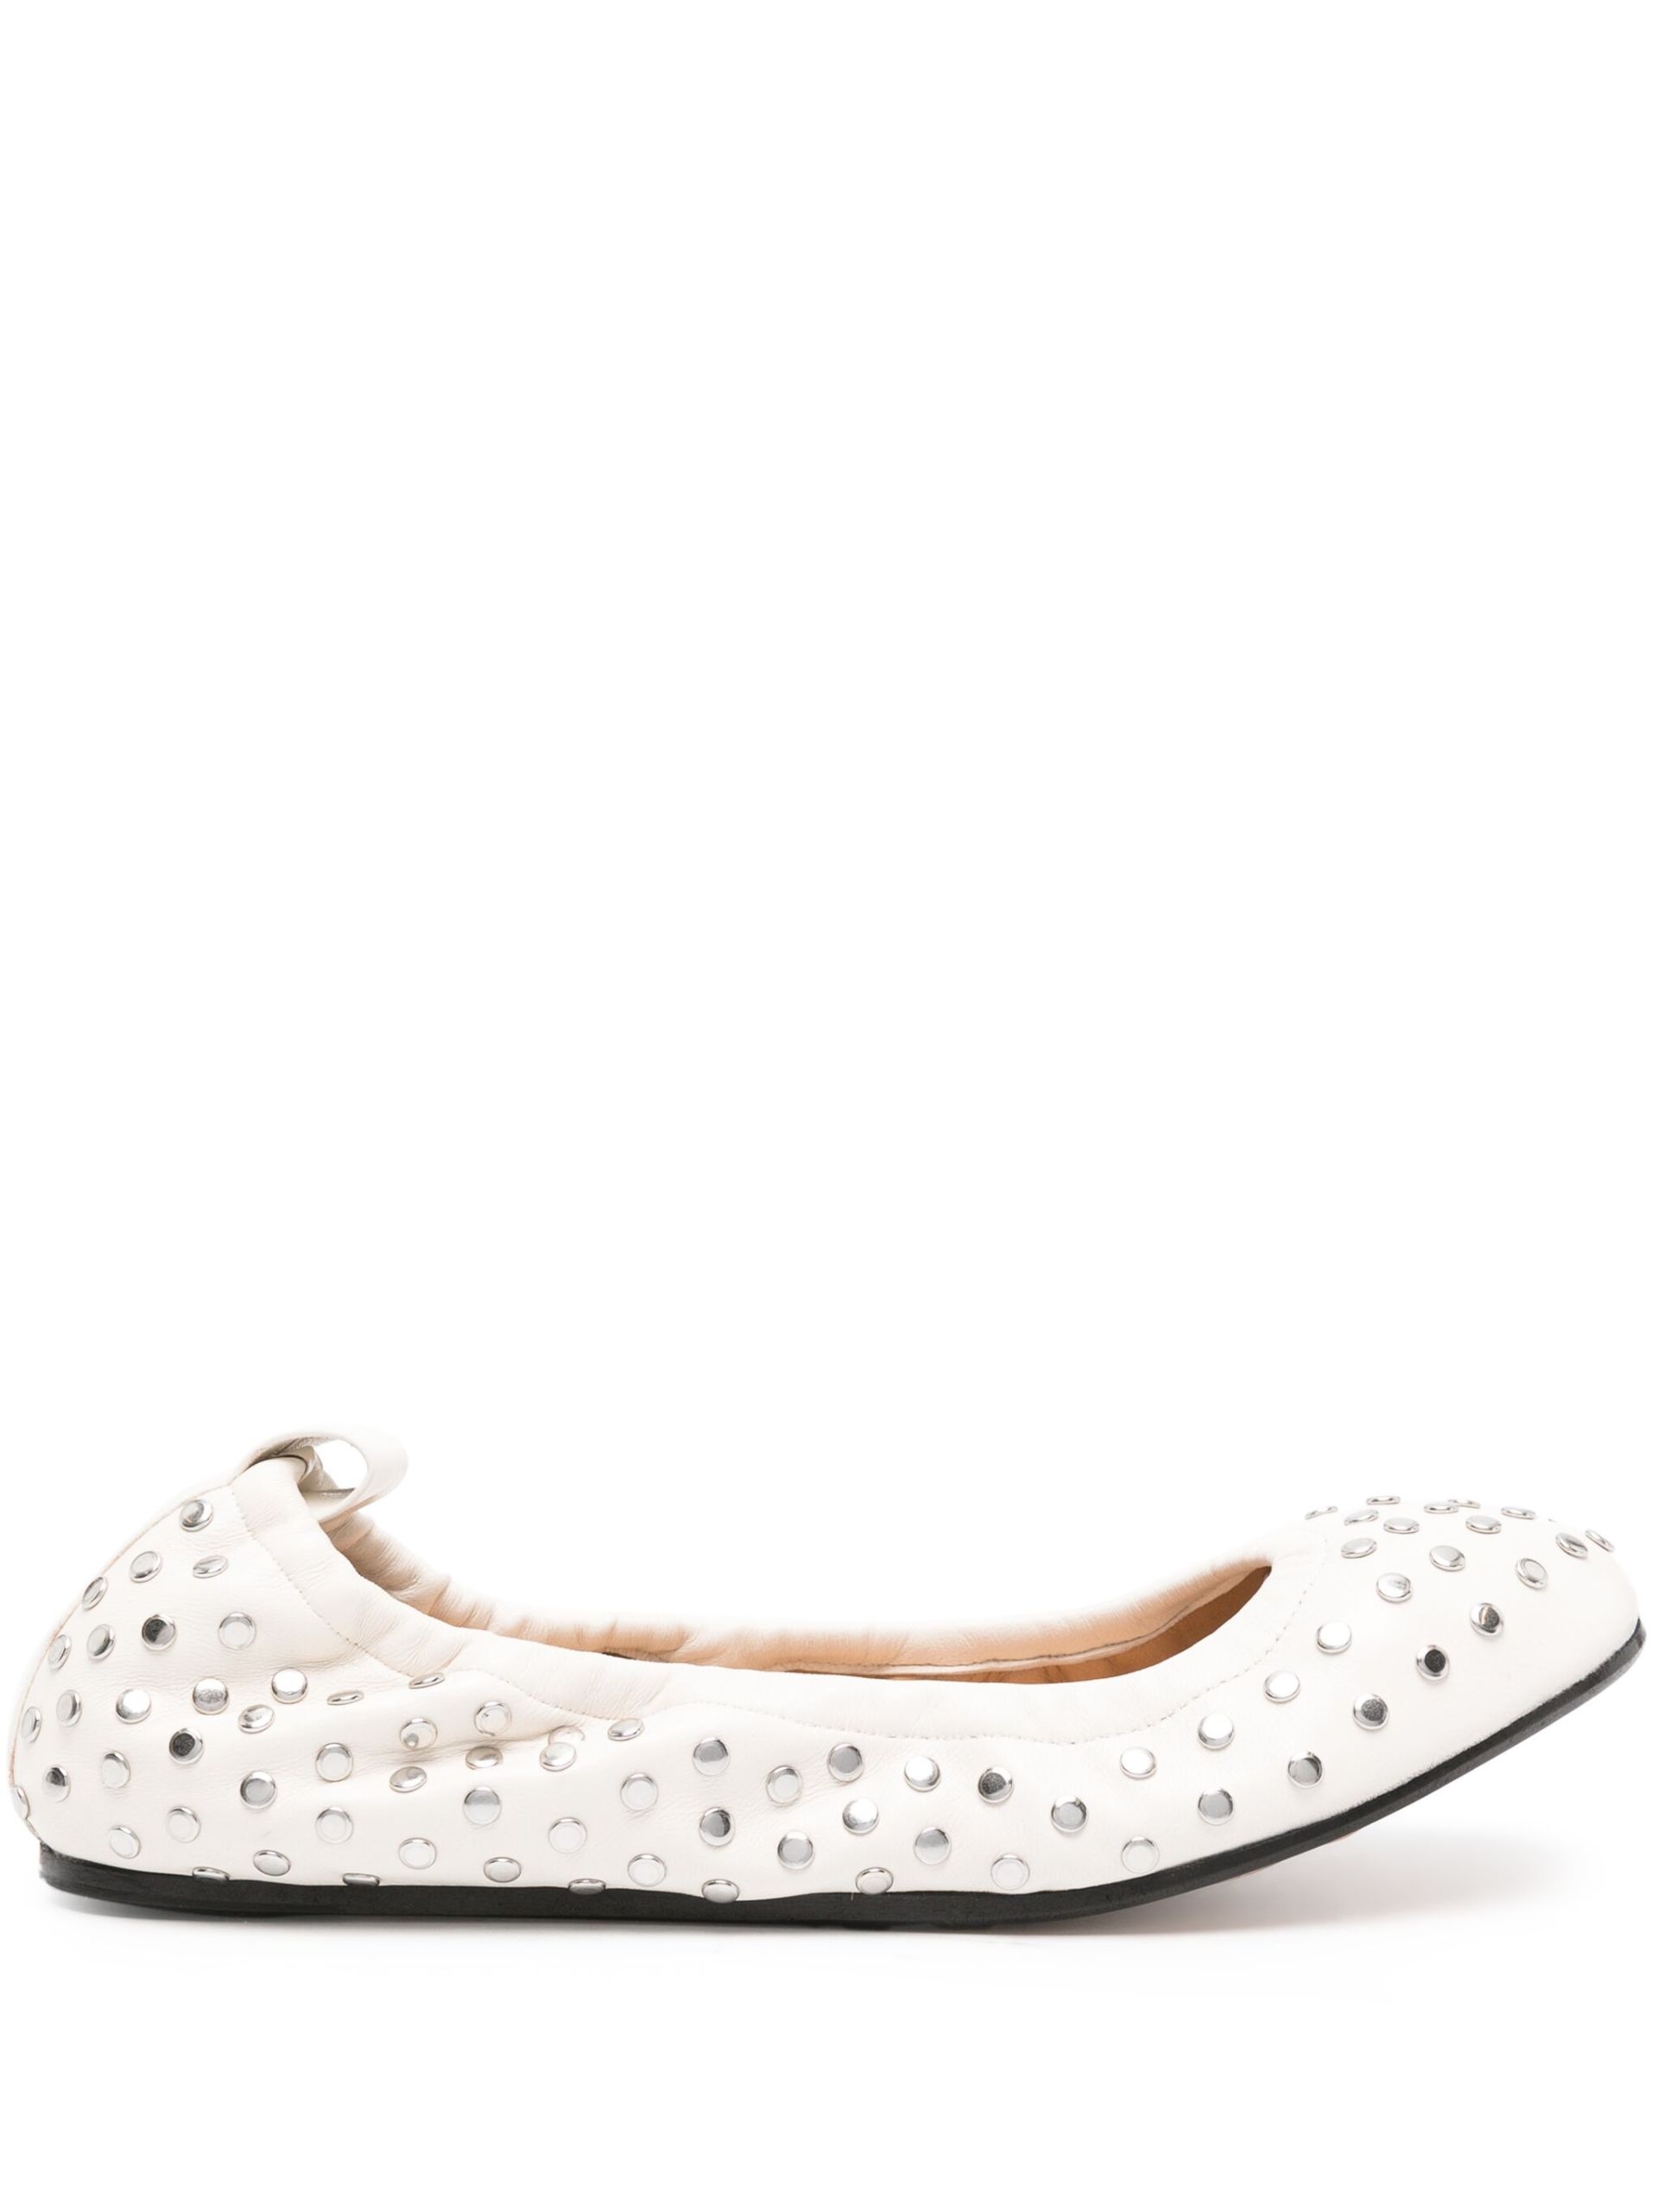 White Stud-Embellished Leather Ballerina Shoes - 1